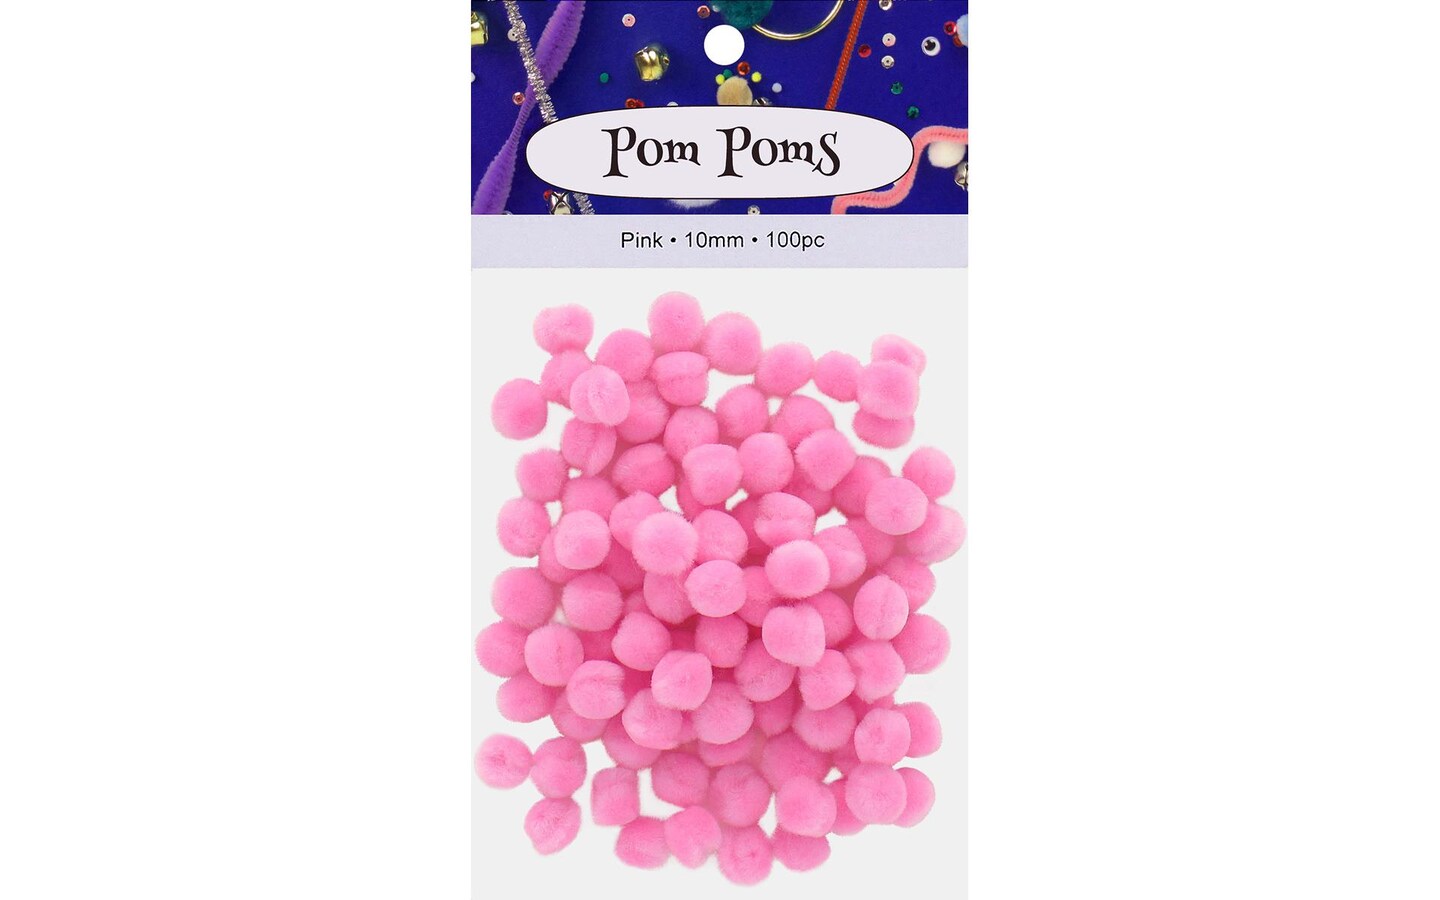 PA Ess Pom Pom 10mm Pkg 100pc Pink